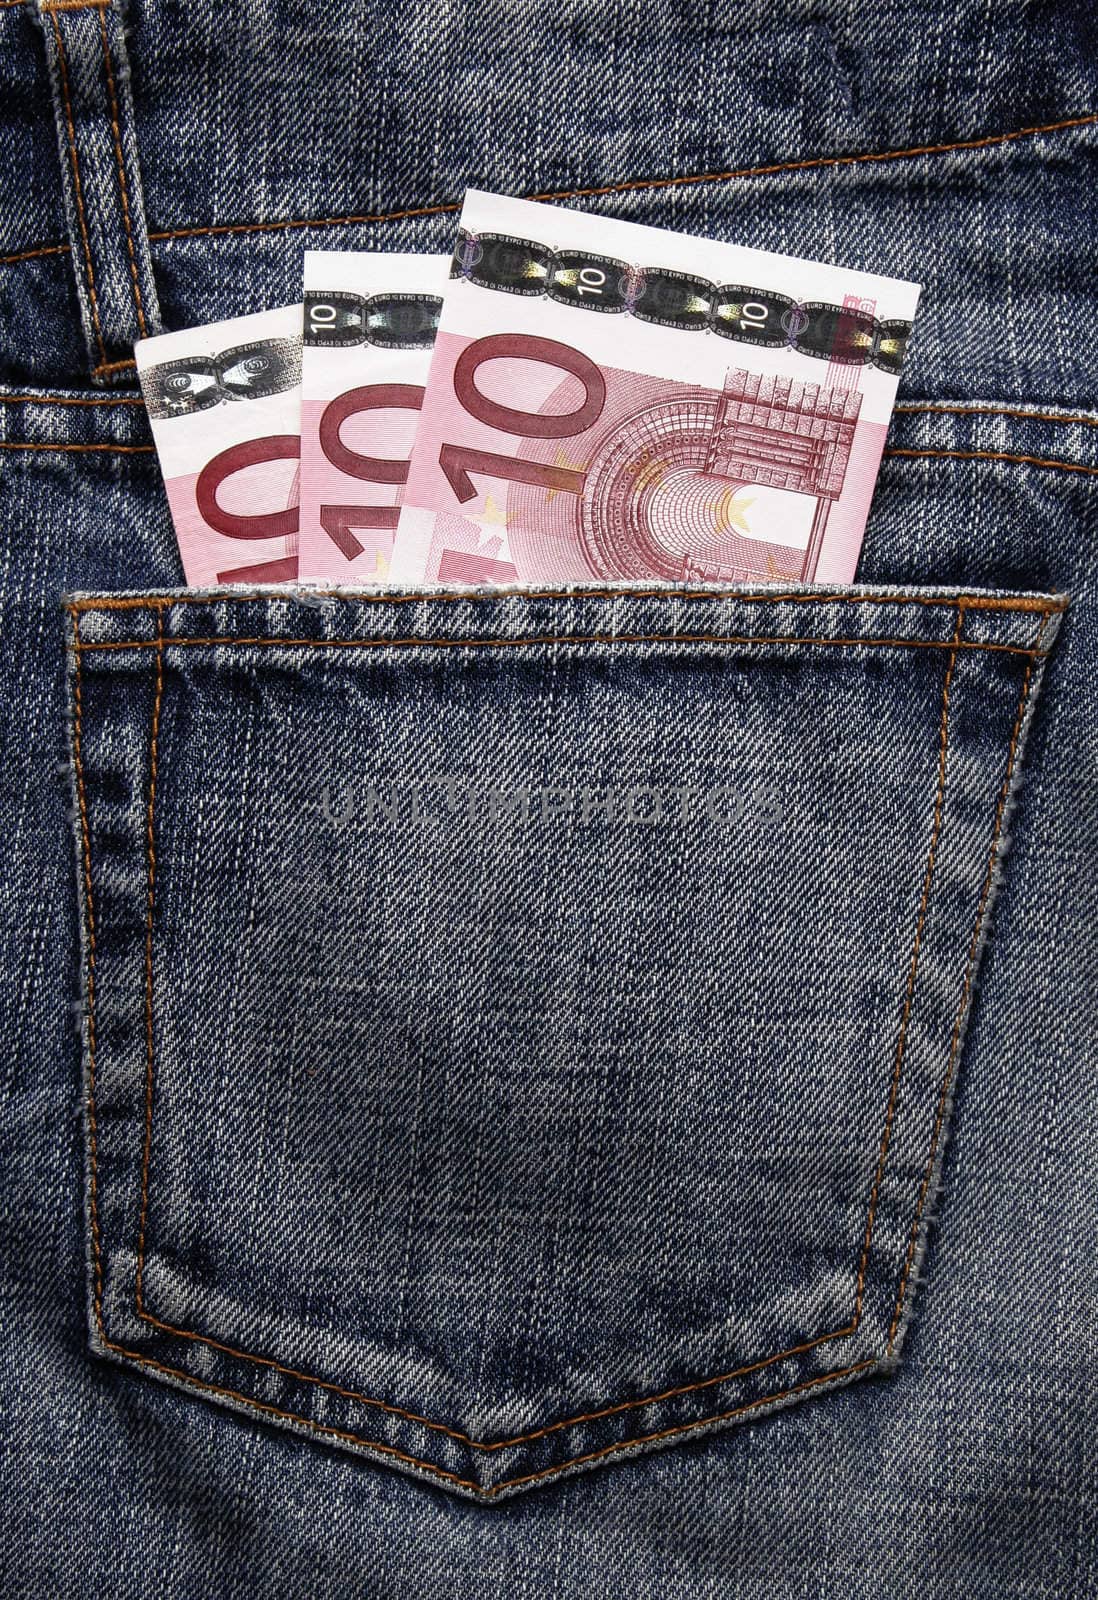 Euro Pocket Money In Blue Jeans by thorsten